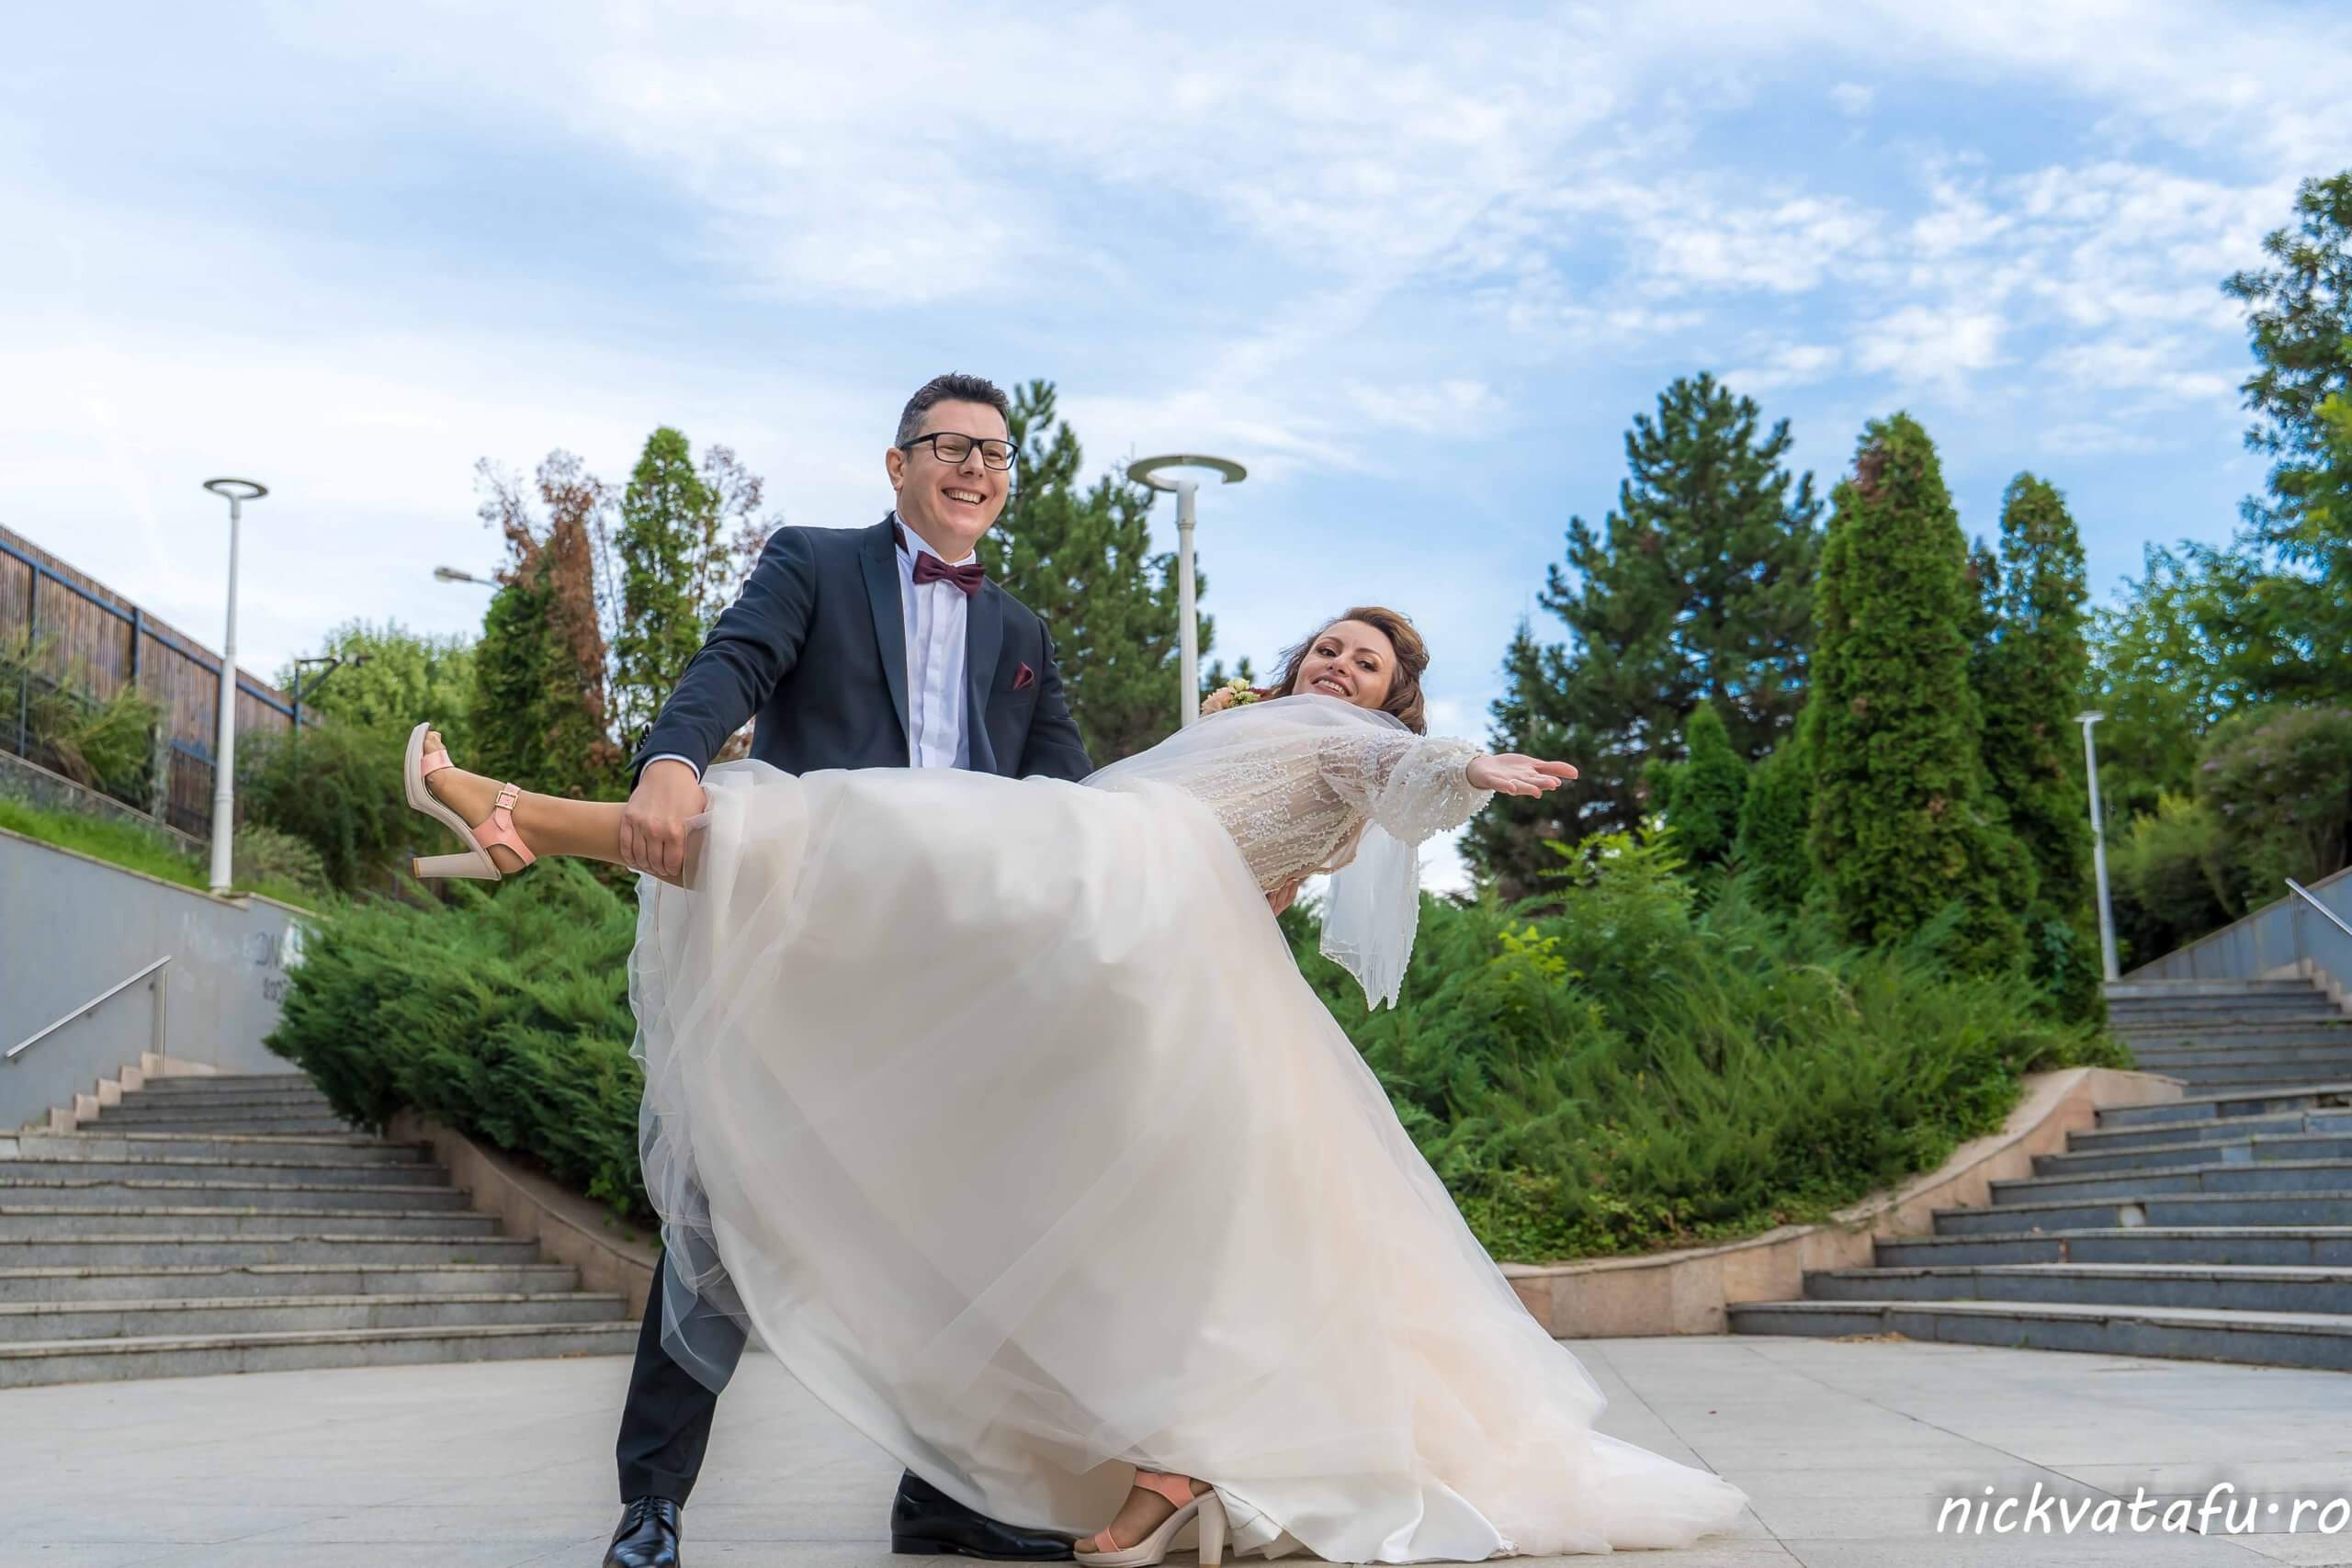 fotograf nunta sedinta foto miri